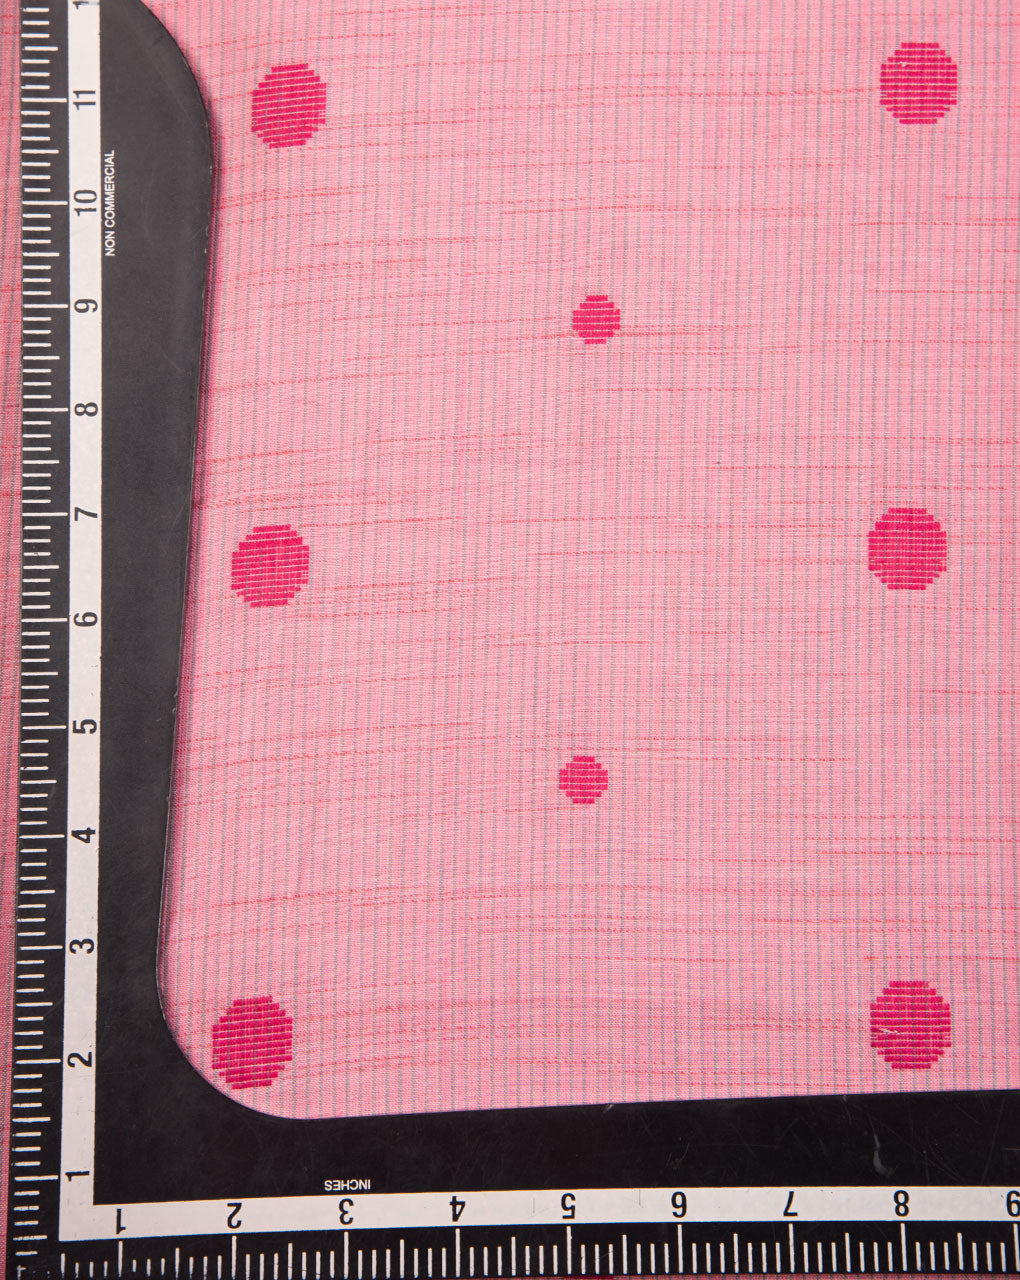 Polka Dots Woven Jacquard Loom Textured Cotton Fabric - Fabriclore.com